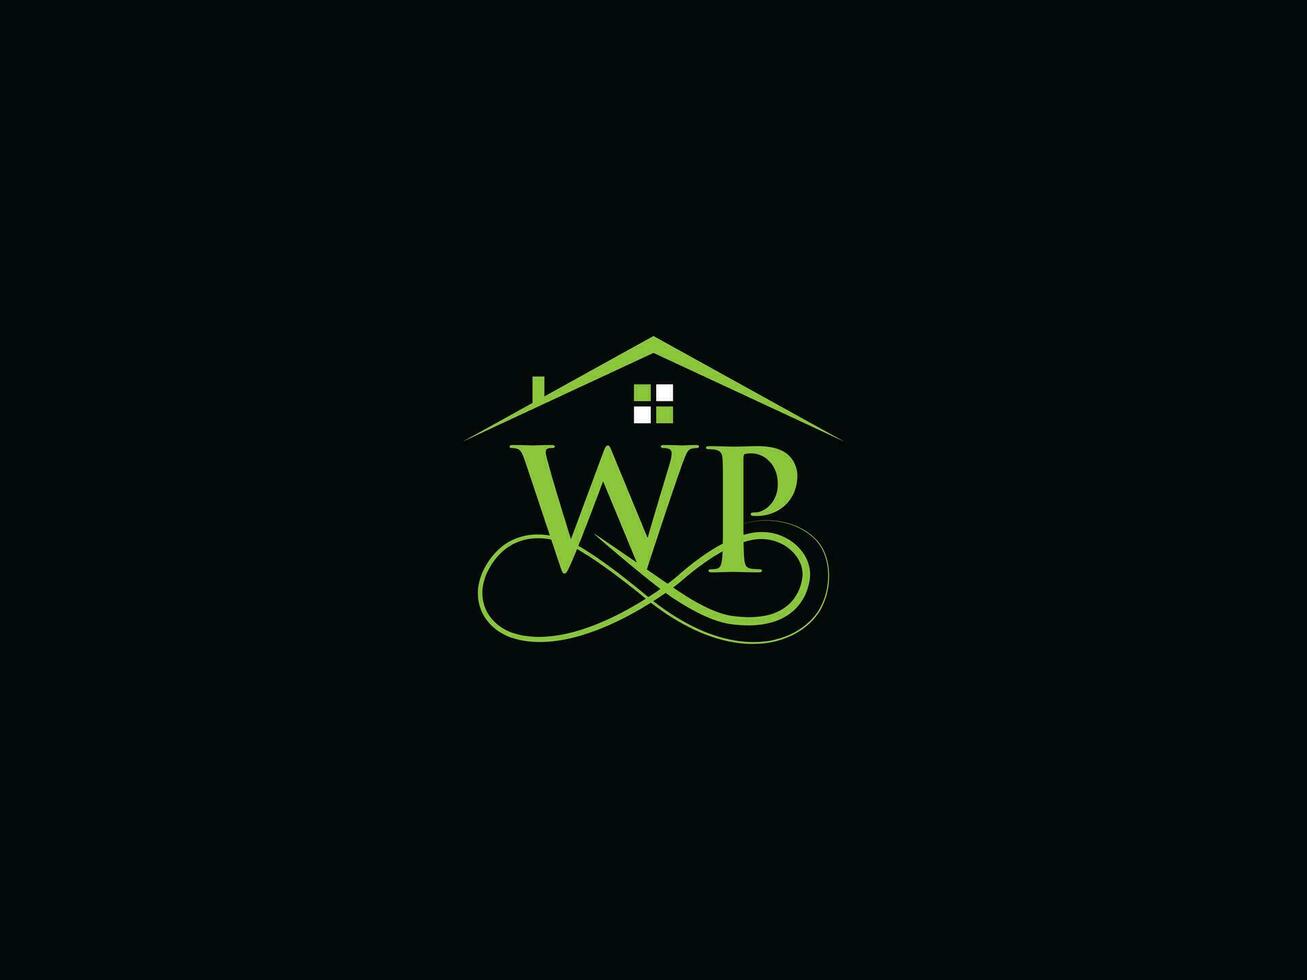 moderno wp real inmuebles logo, lujo wp logo icono vector para edificio negocio